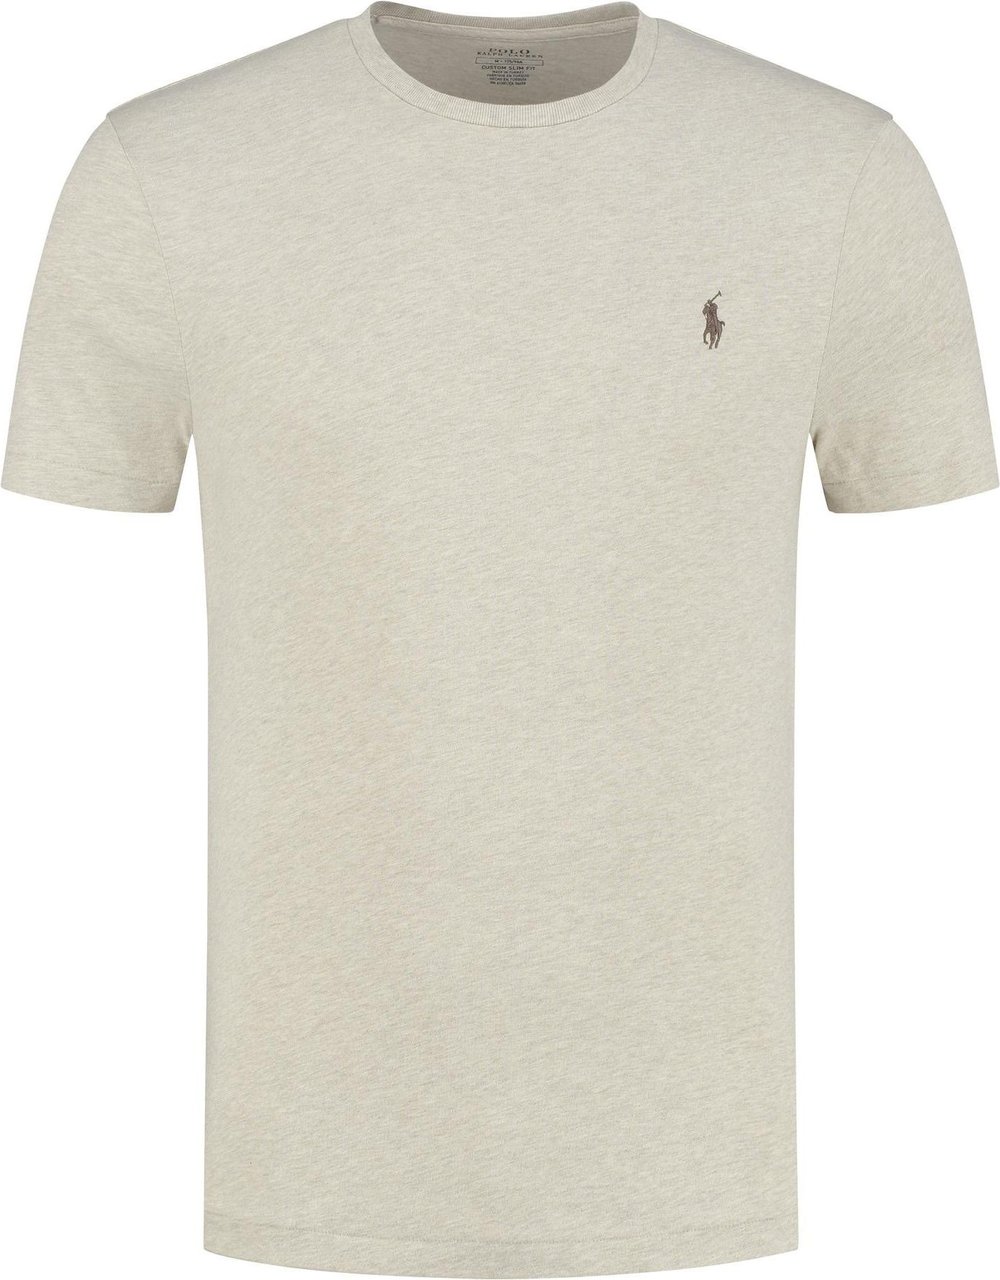 Ralph Lauren T-shirt Beige